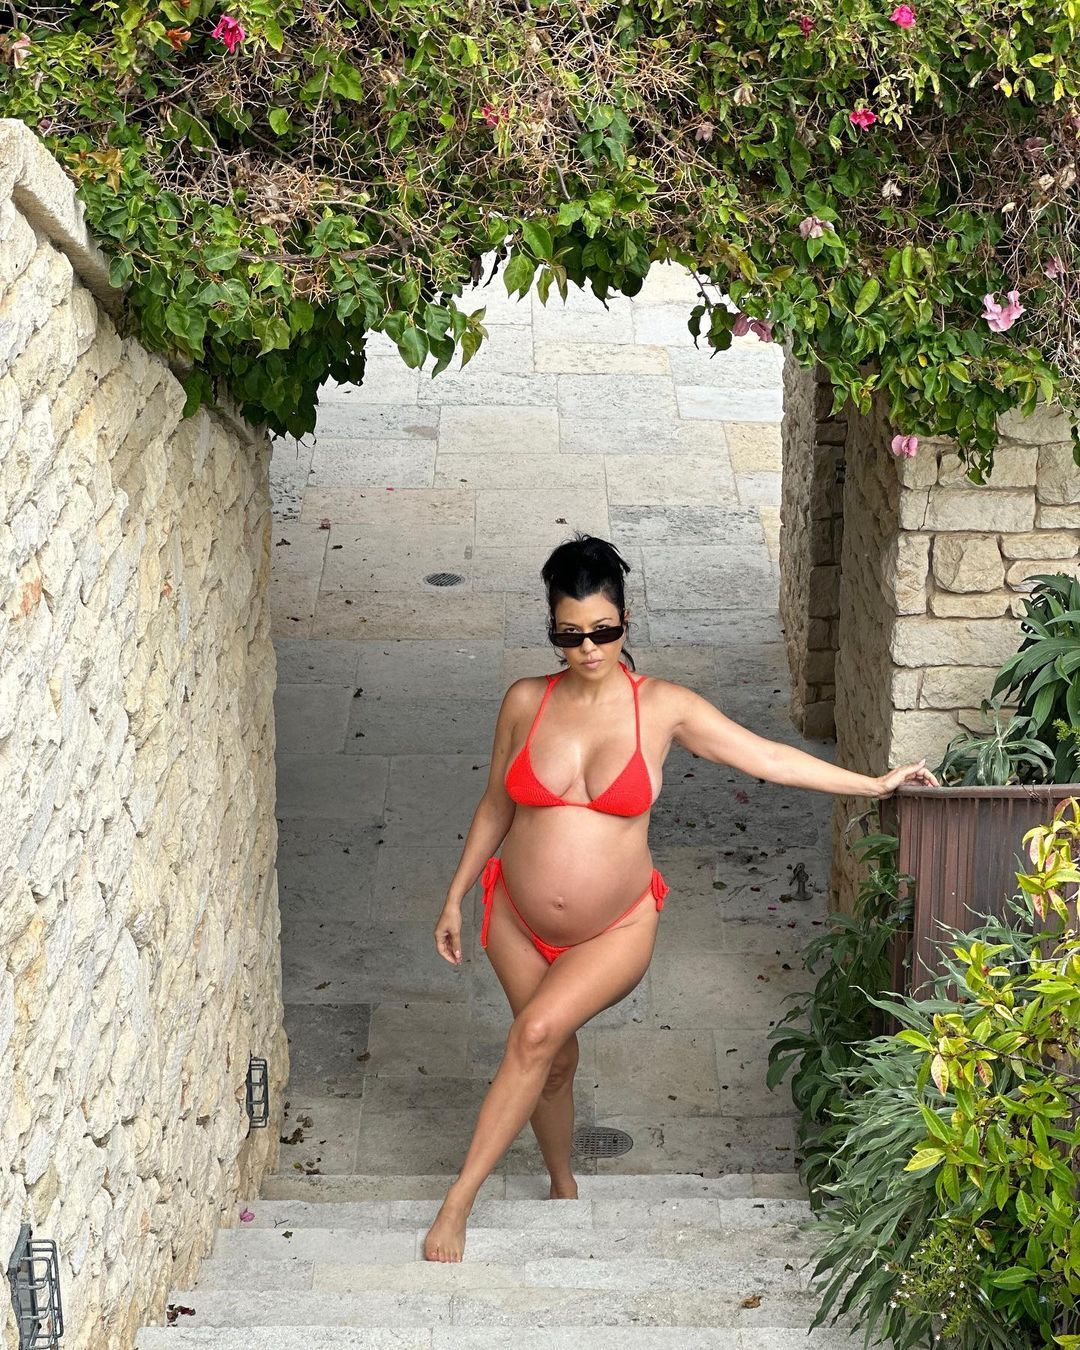 Pregnant Kourtney Kardashian Cradles Baby Bump in Red Bikini